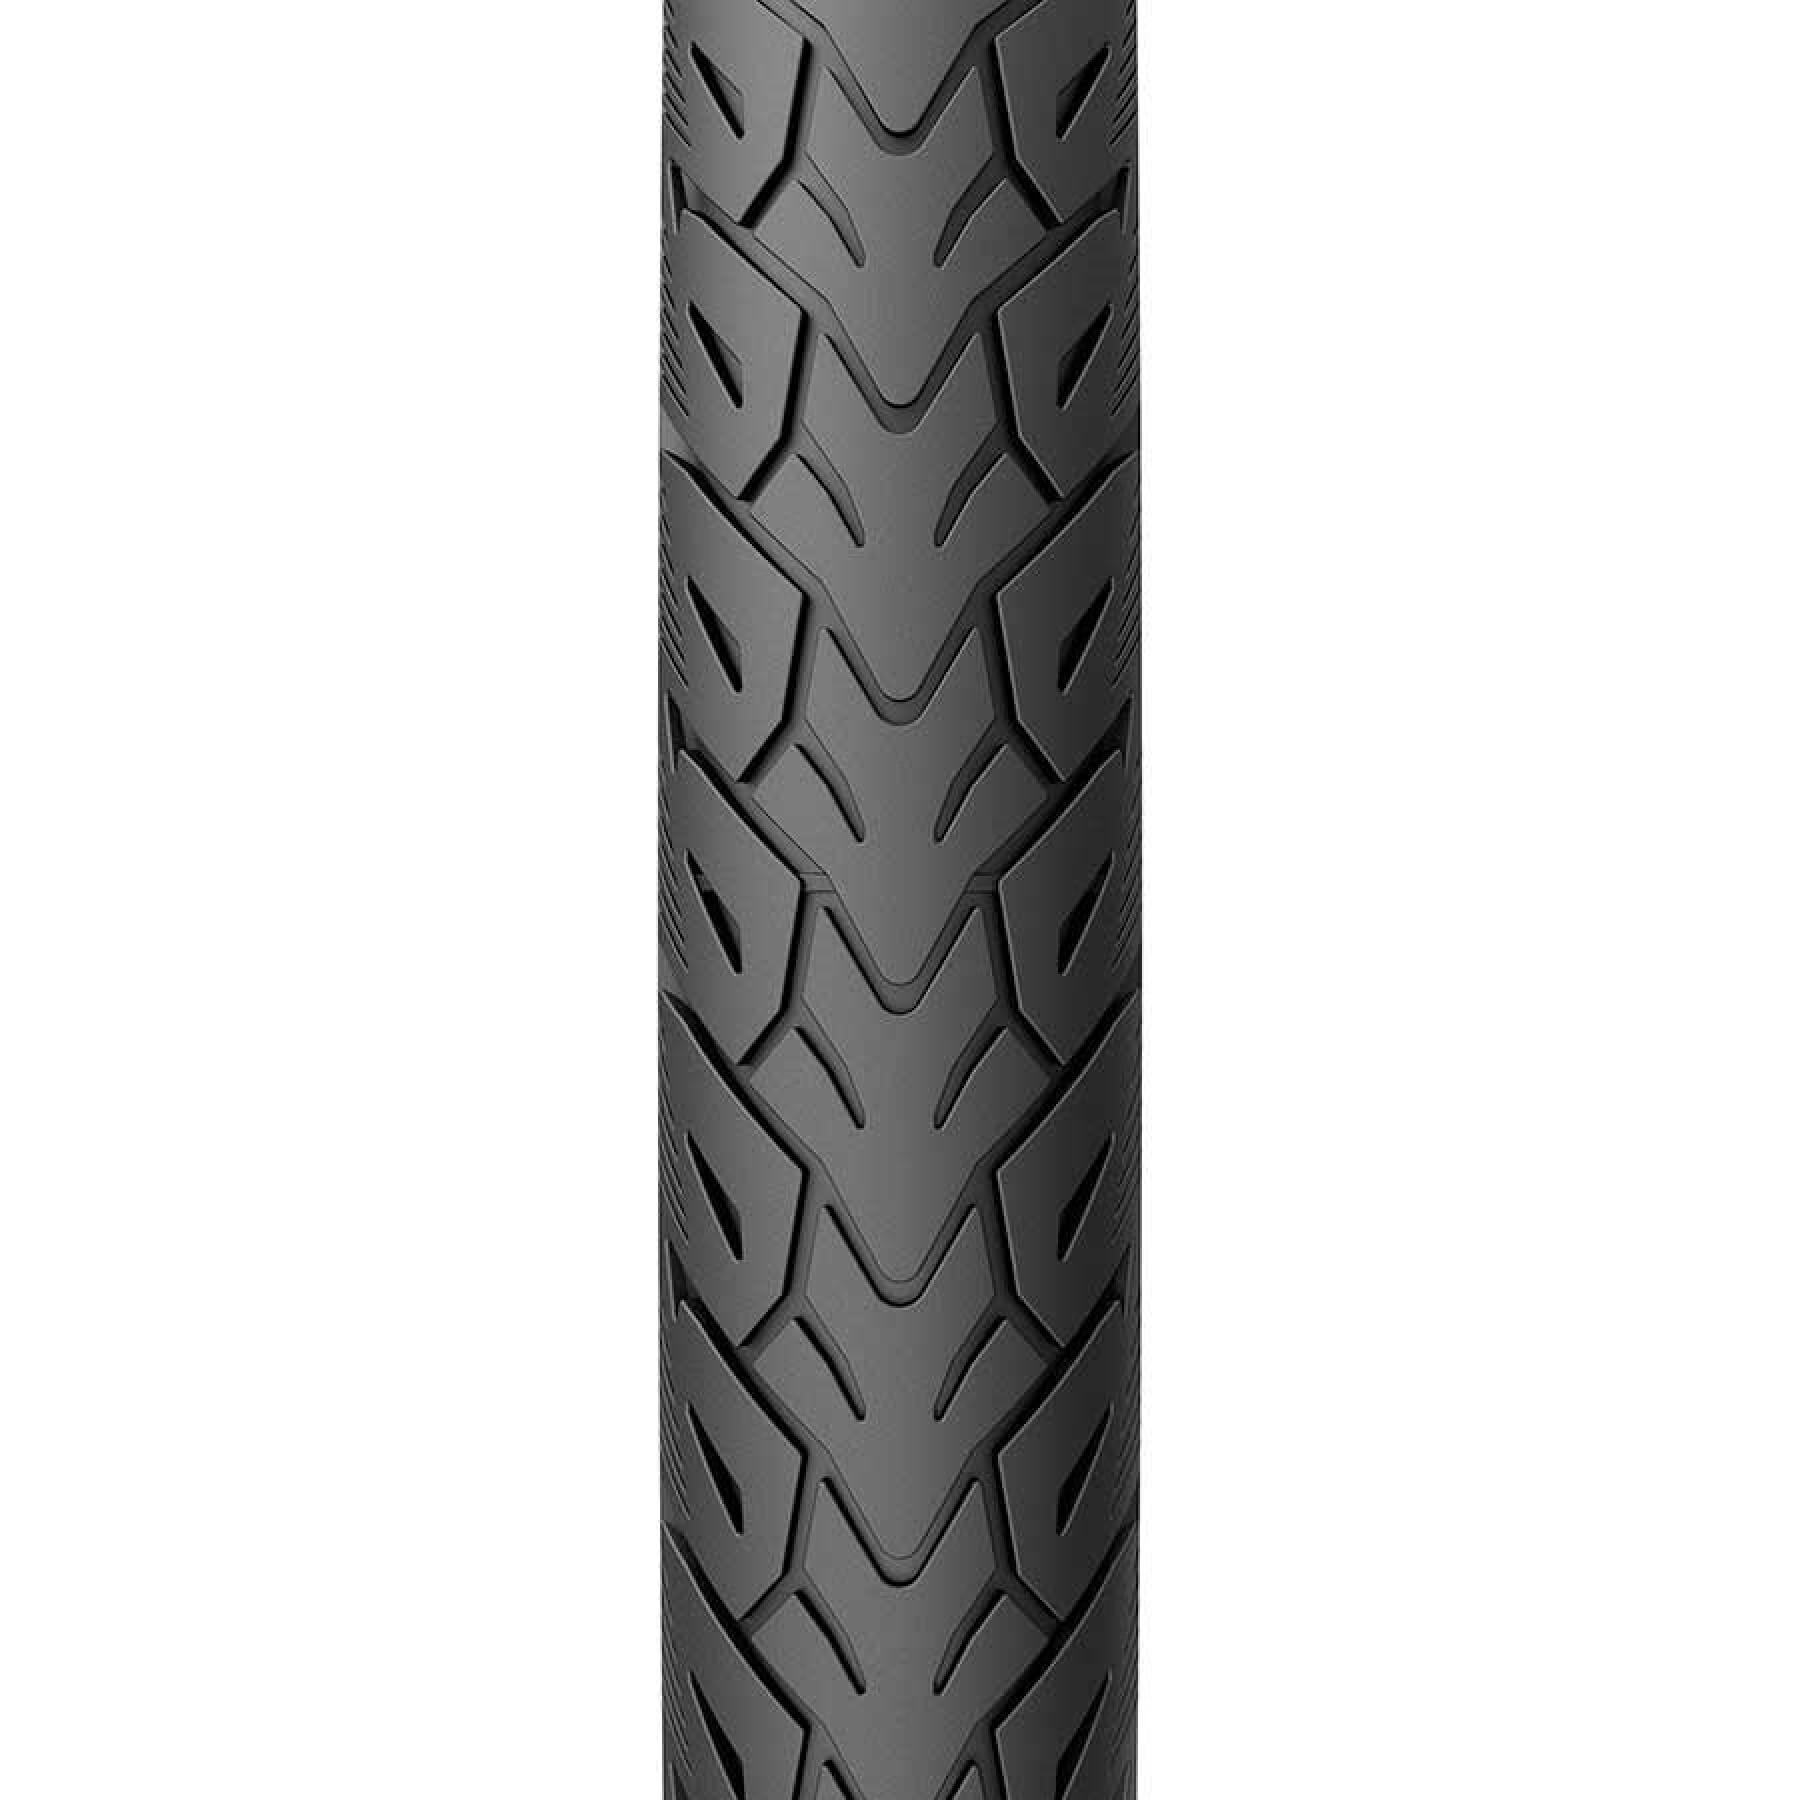 Neumáticos Pirelli Cycl-e DT